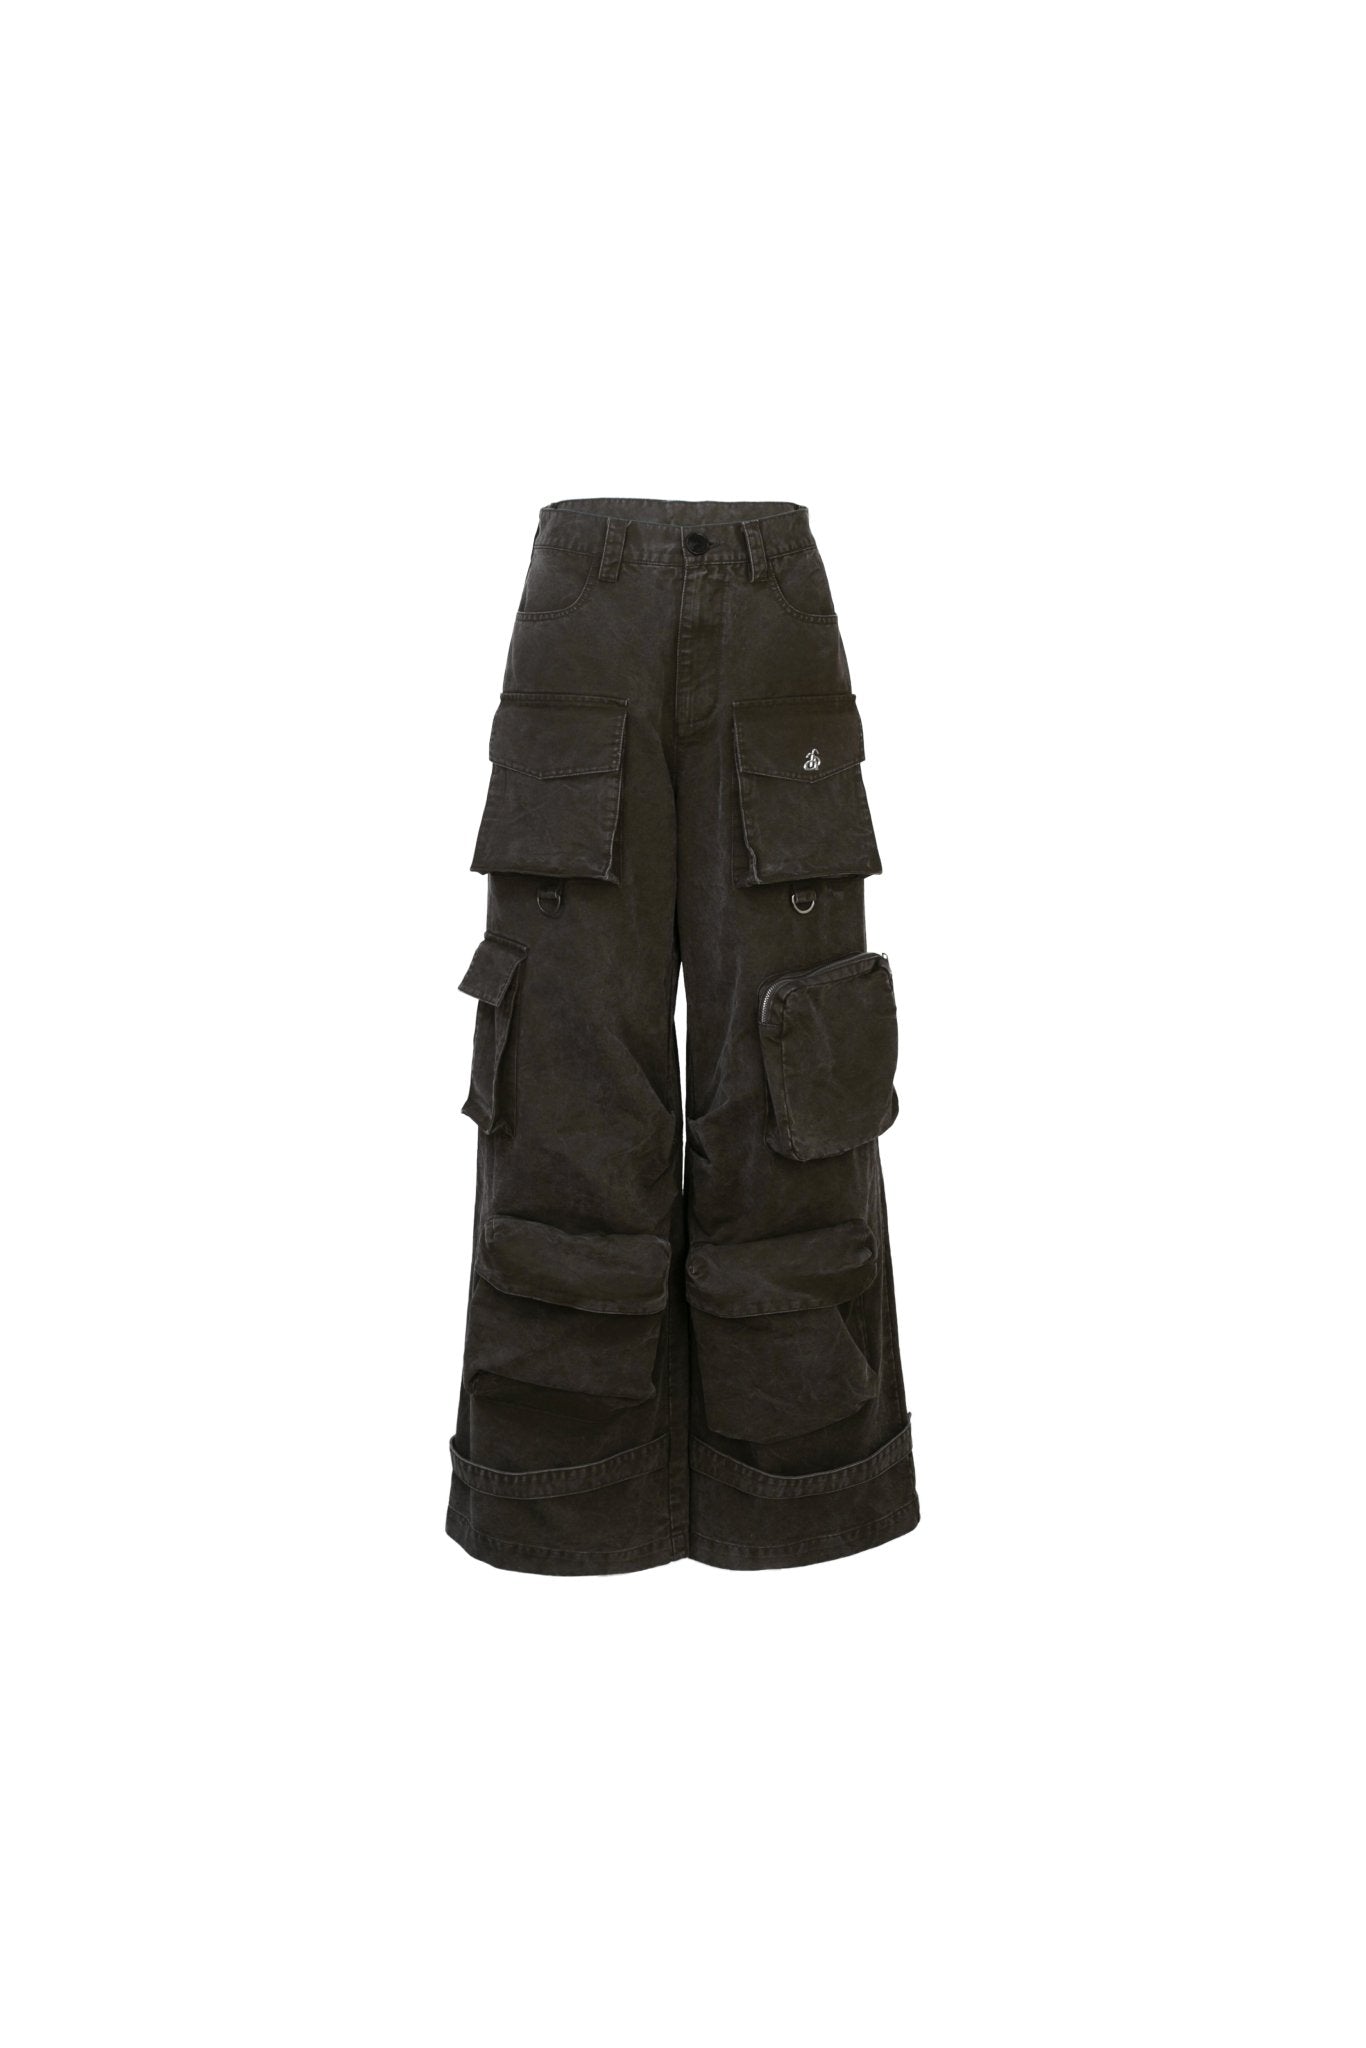 BYBBs Dark Detachable Multi Pocket Camouflage Cargo Pants Mens For Men  Harajuku Hip Hop Streetwear Joggers With Elastic Waist And Sweatpants  Techwear CX200729 From Qiyuan02, $40.26 | DHgate.Com